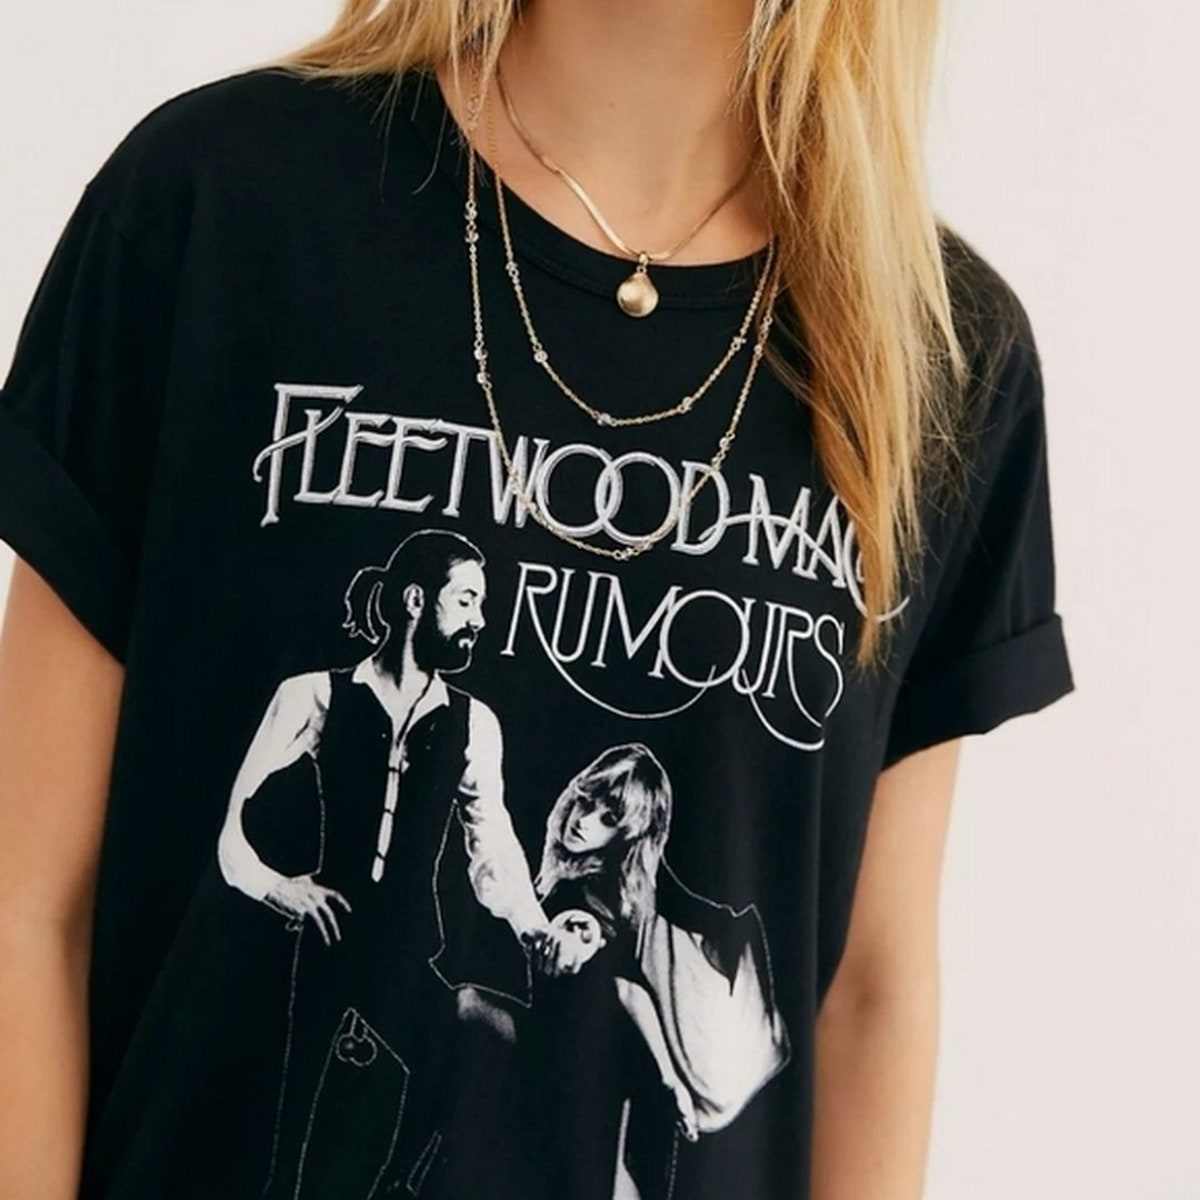 Fleetwood Mac T Shirt Vintage Rumour - Apparel, Mug, Home Decor - Perfect Gift For Everyone